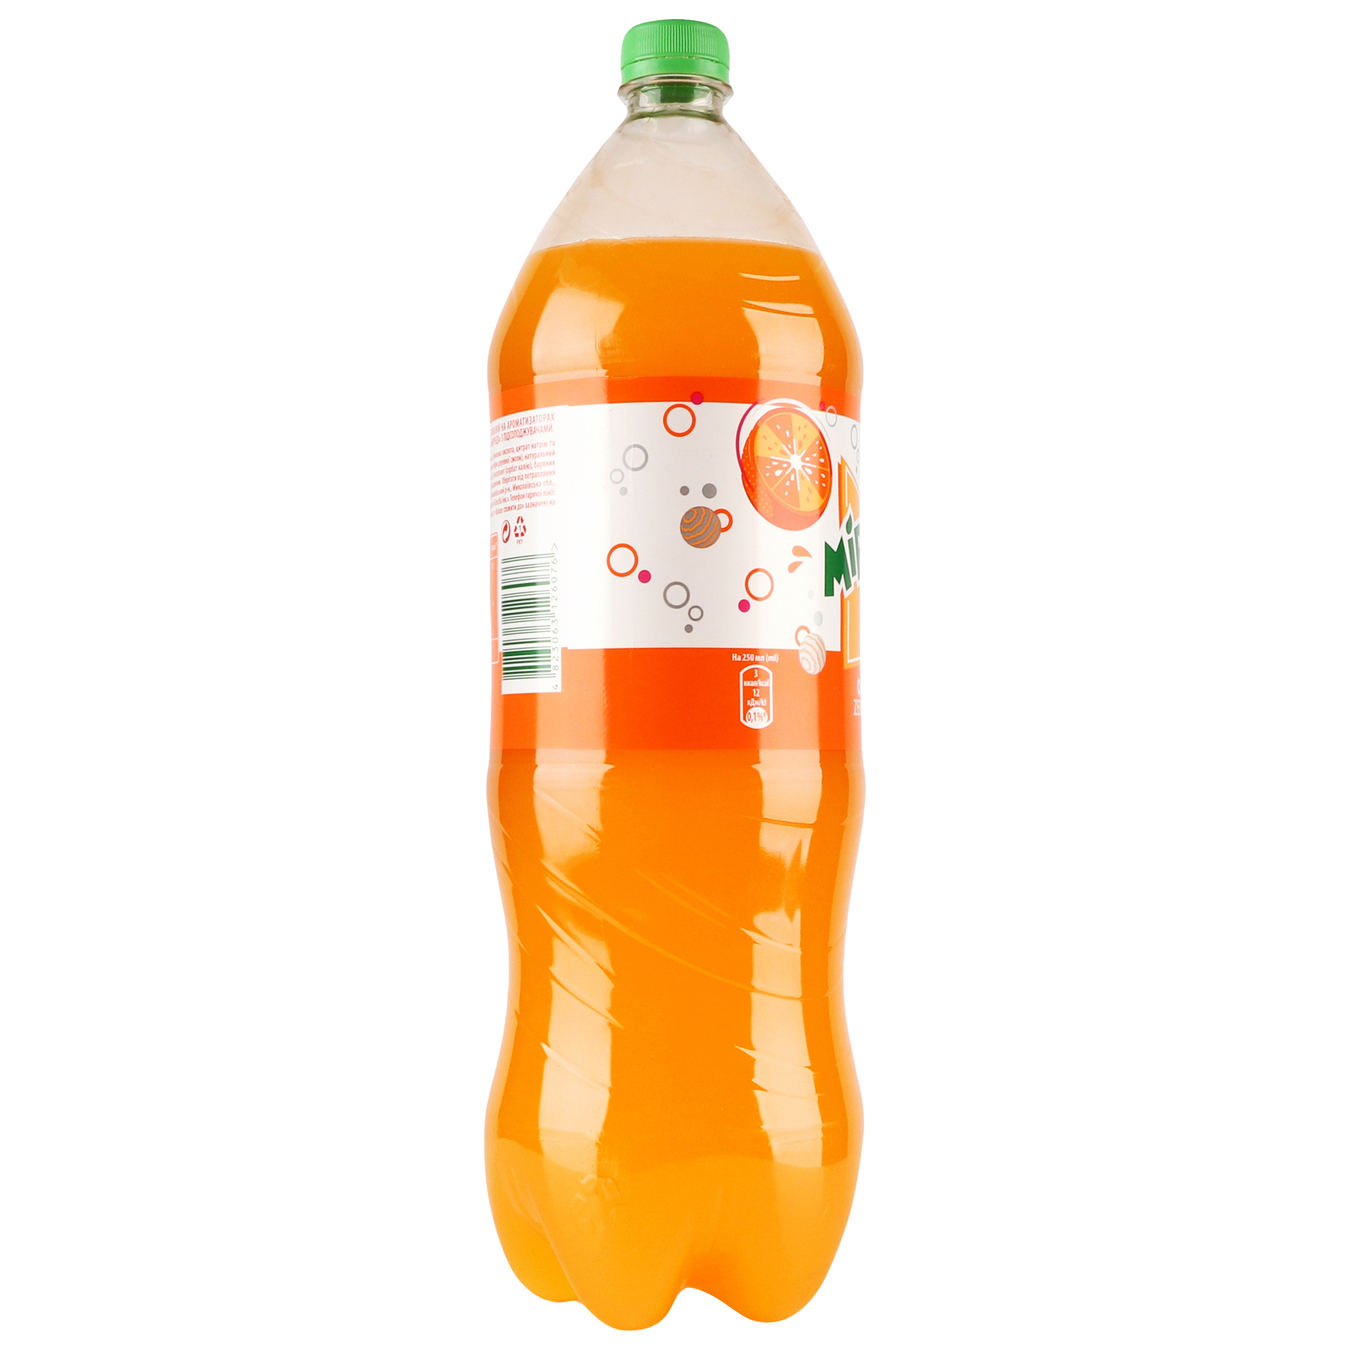  Carbonated drink Mirinda Orange Free 2 l 2